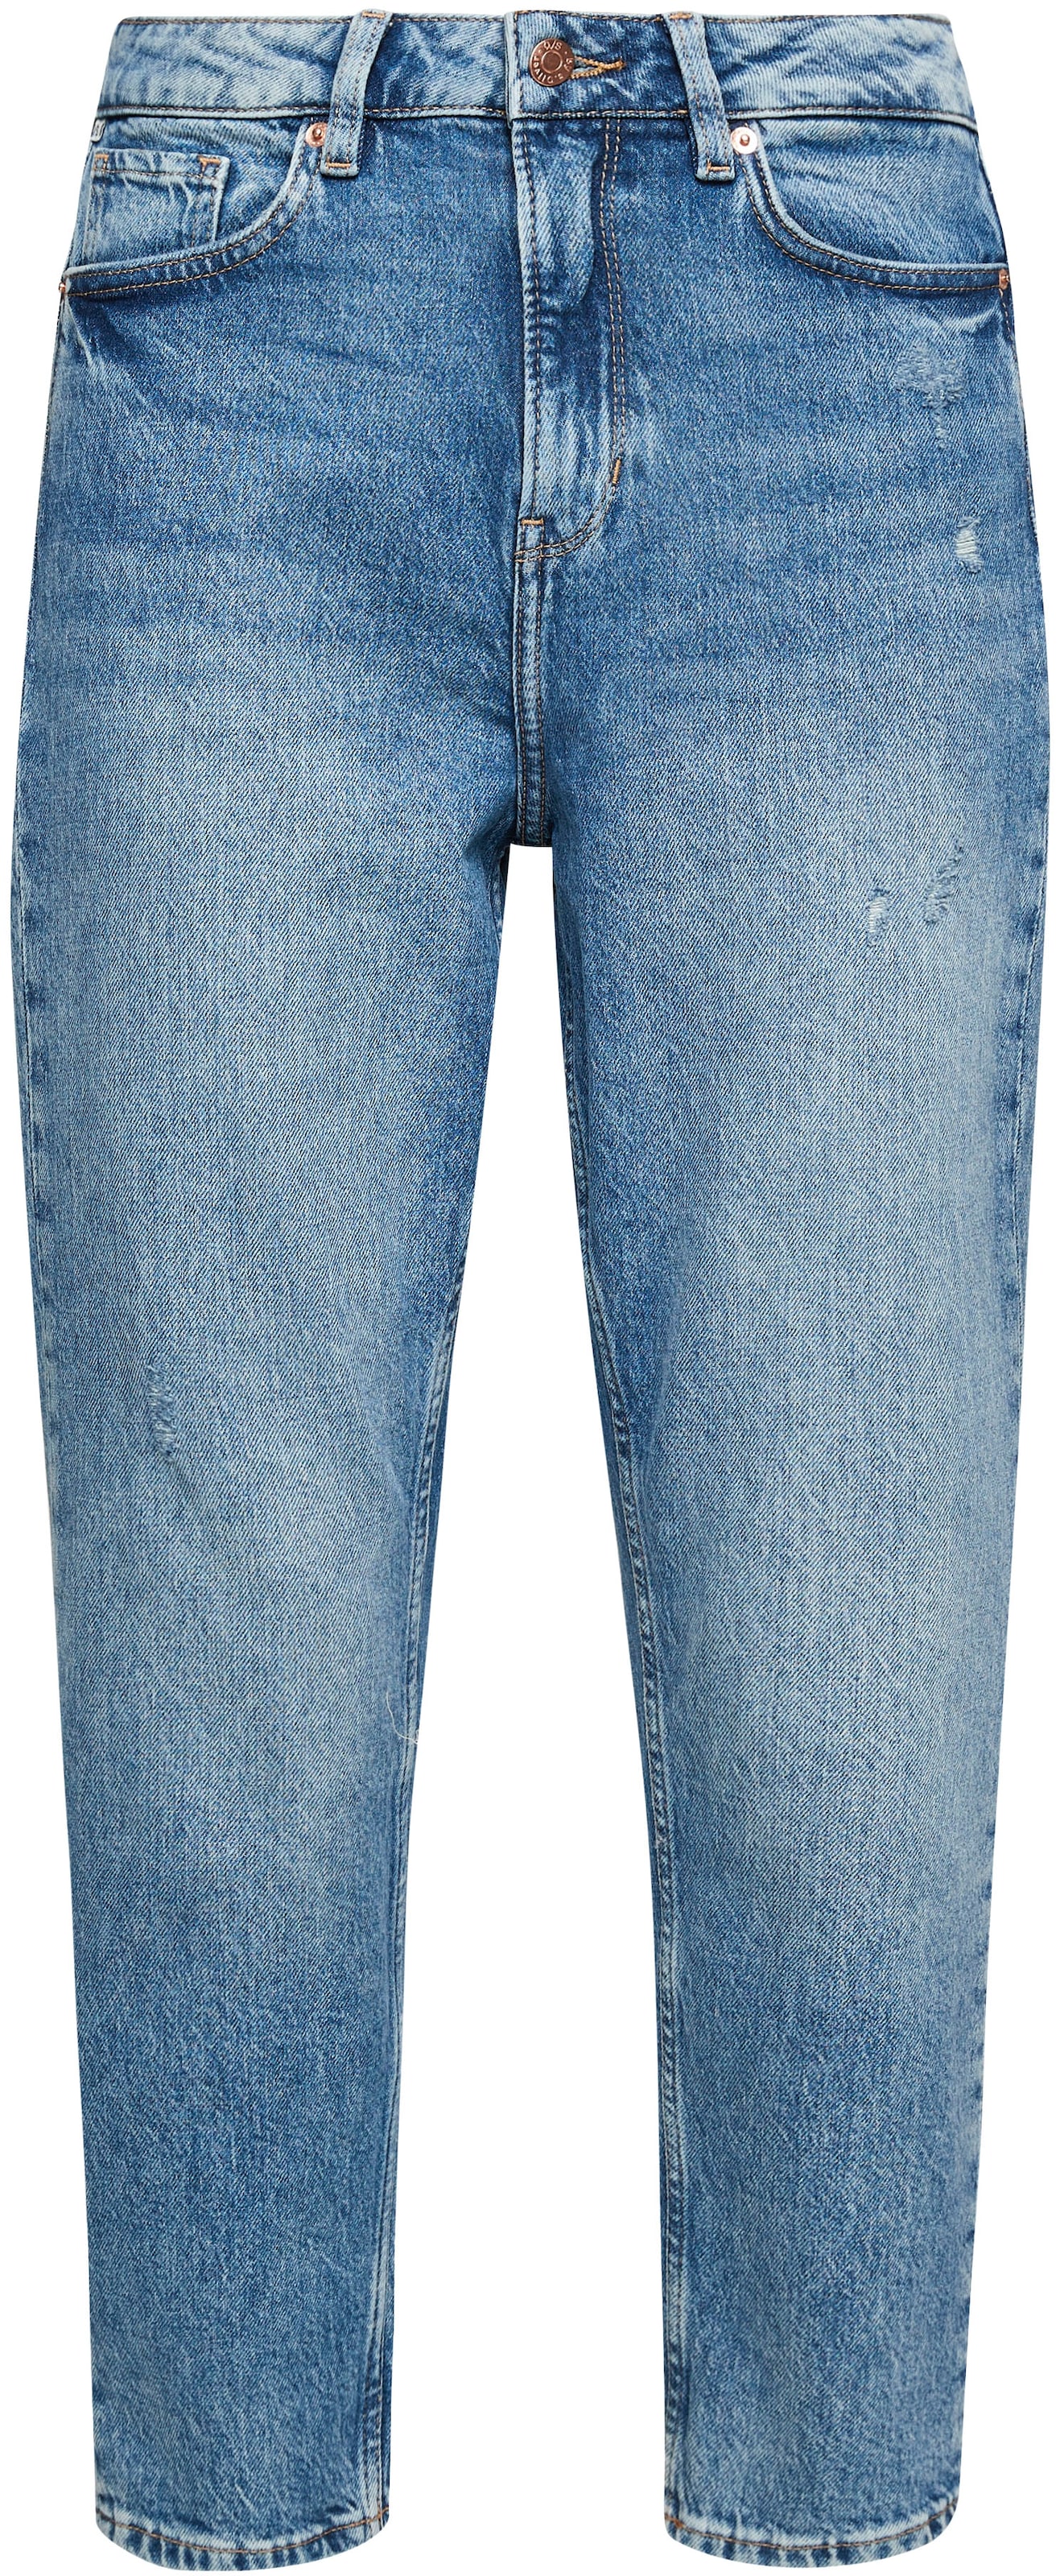 Q/S by s.Oliver Tapered-fit-Jeans, Online im im OTTO klassischen Shop 5-Pocket-Style